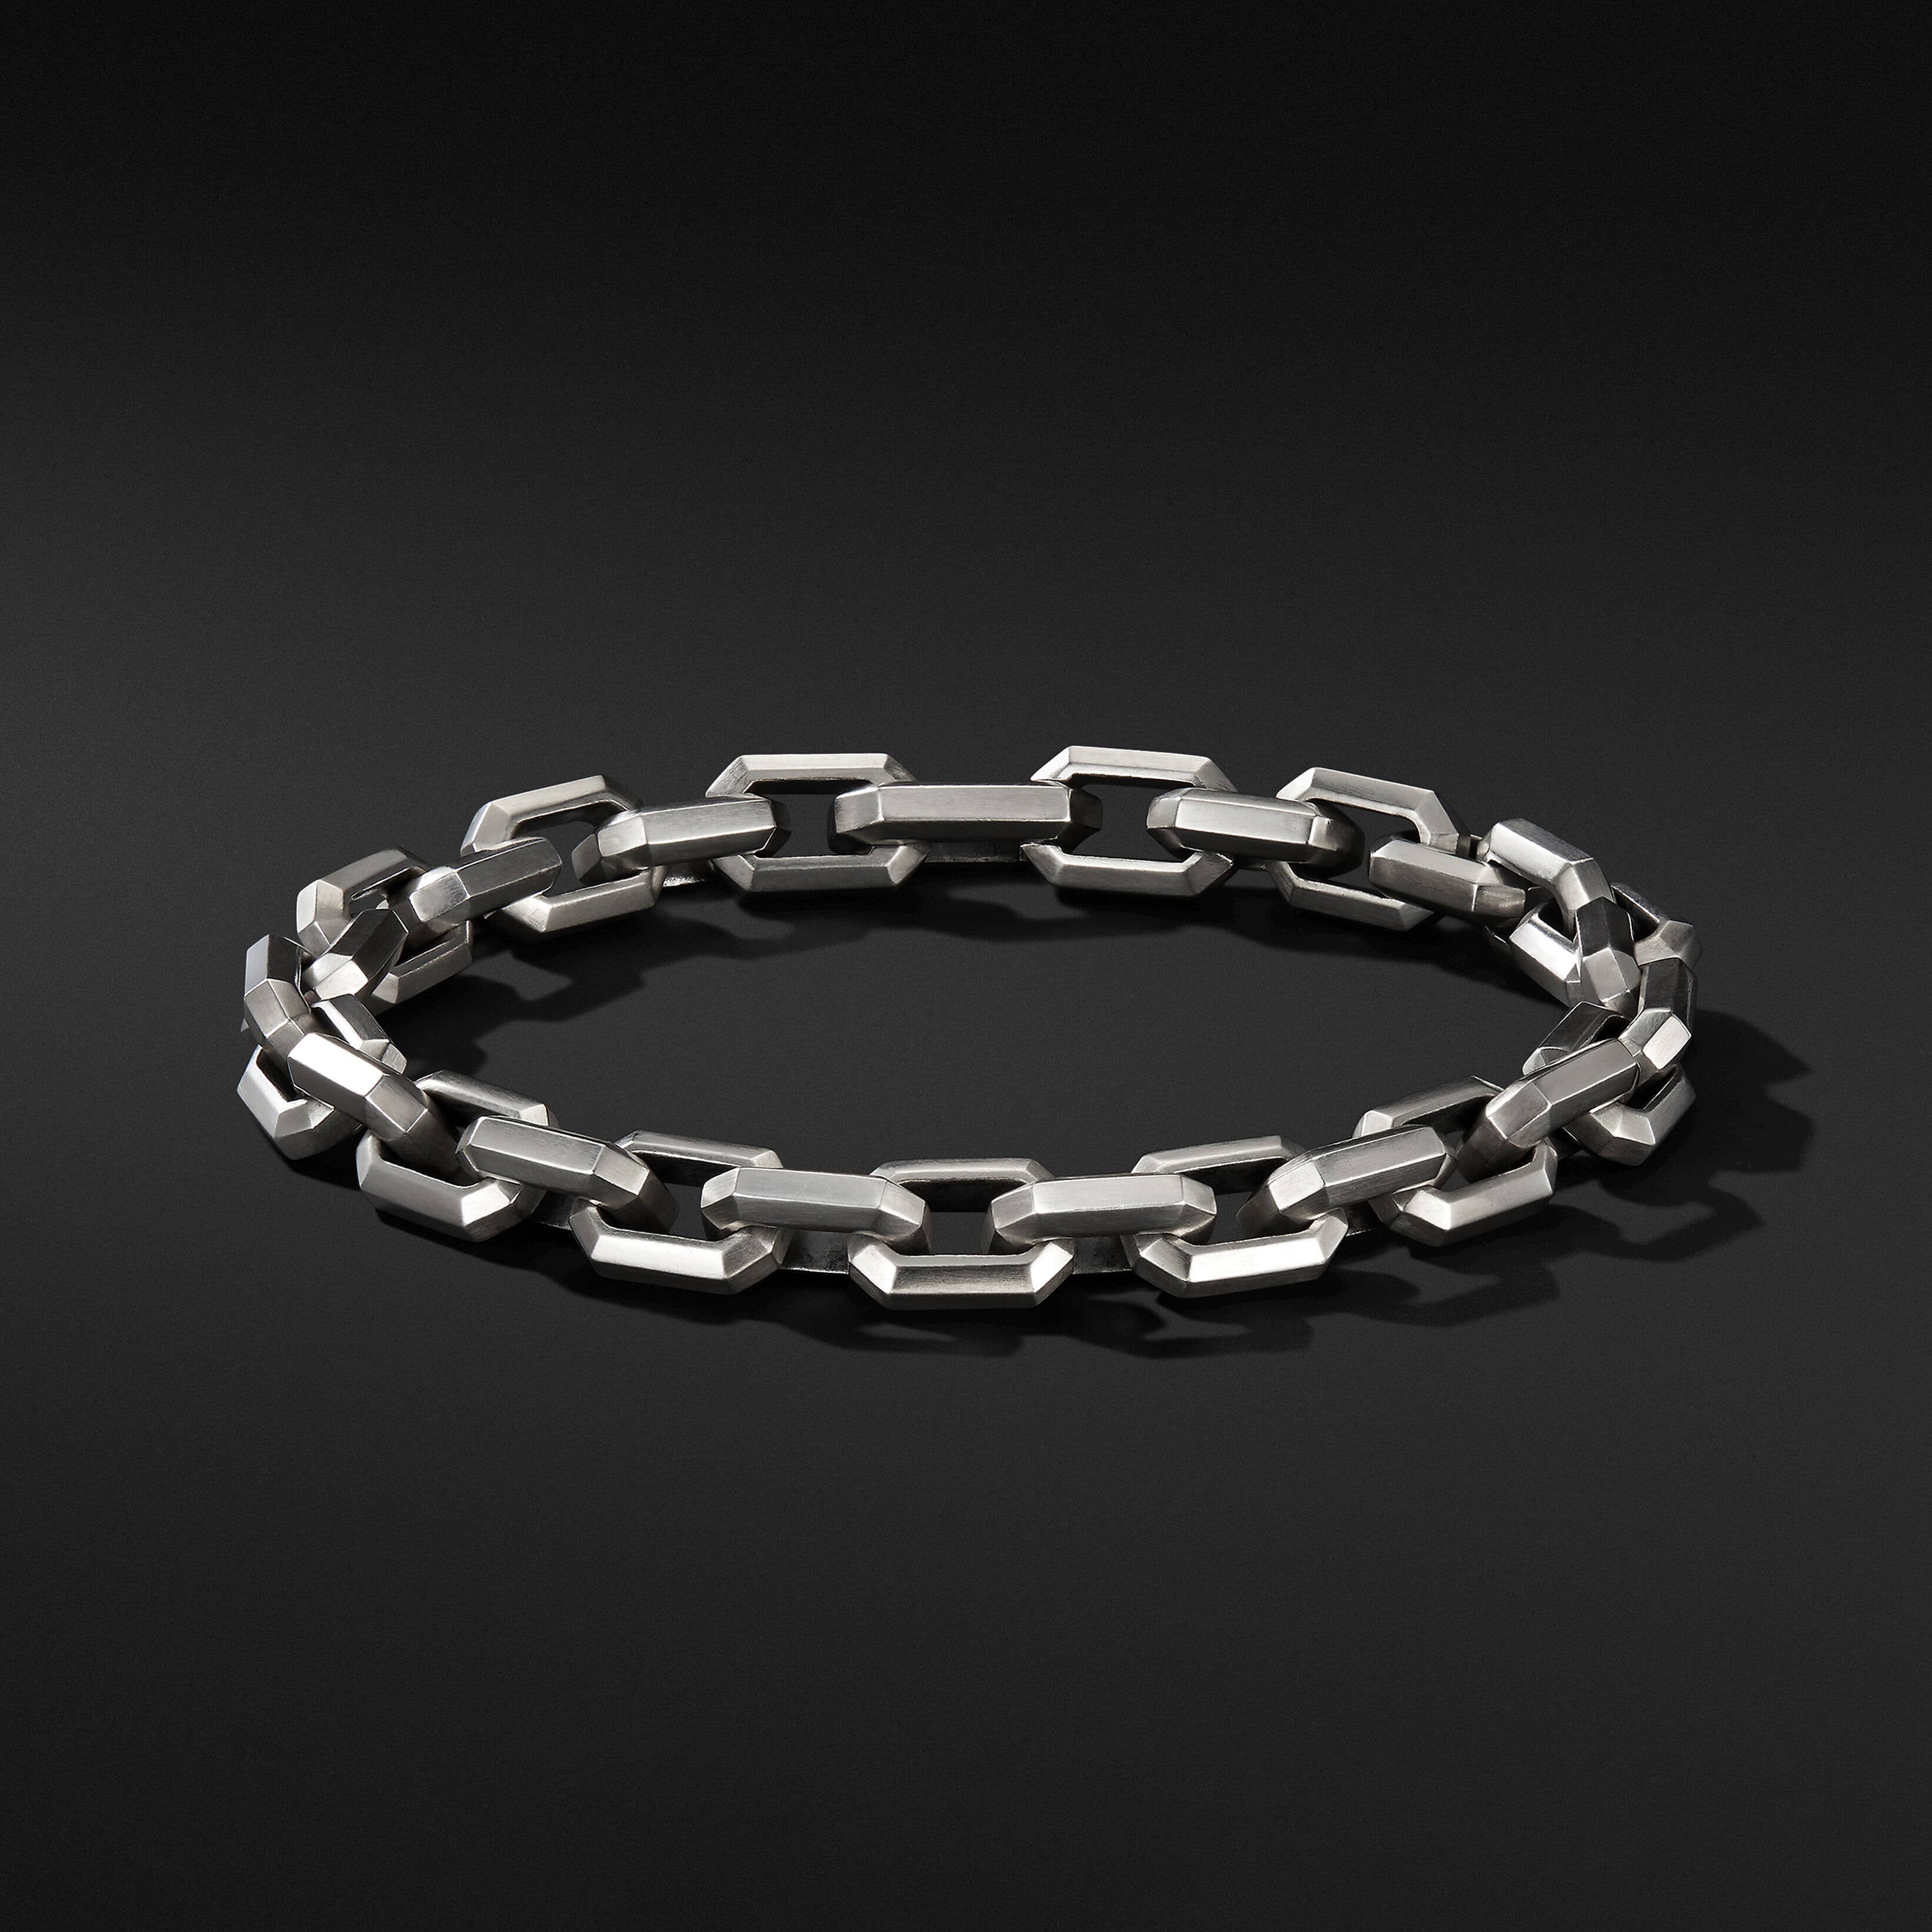 Heirloom Chain Link Bracelet in Sterling Silver